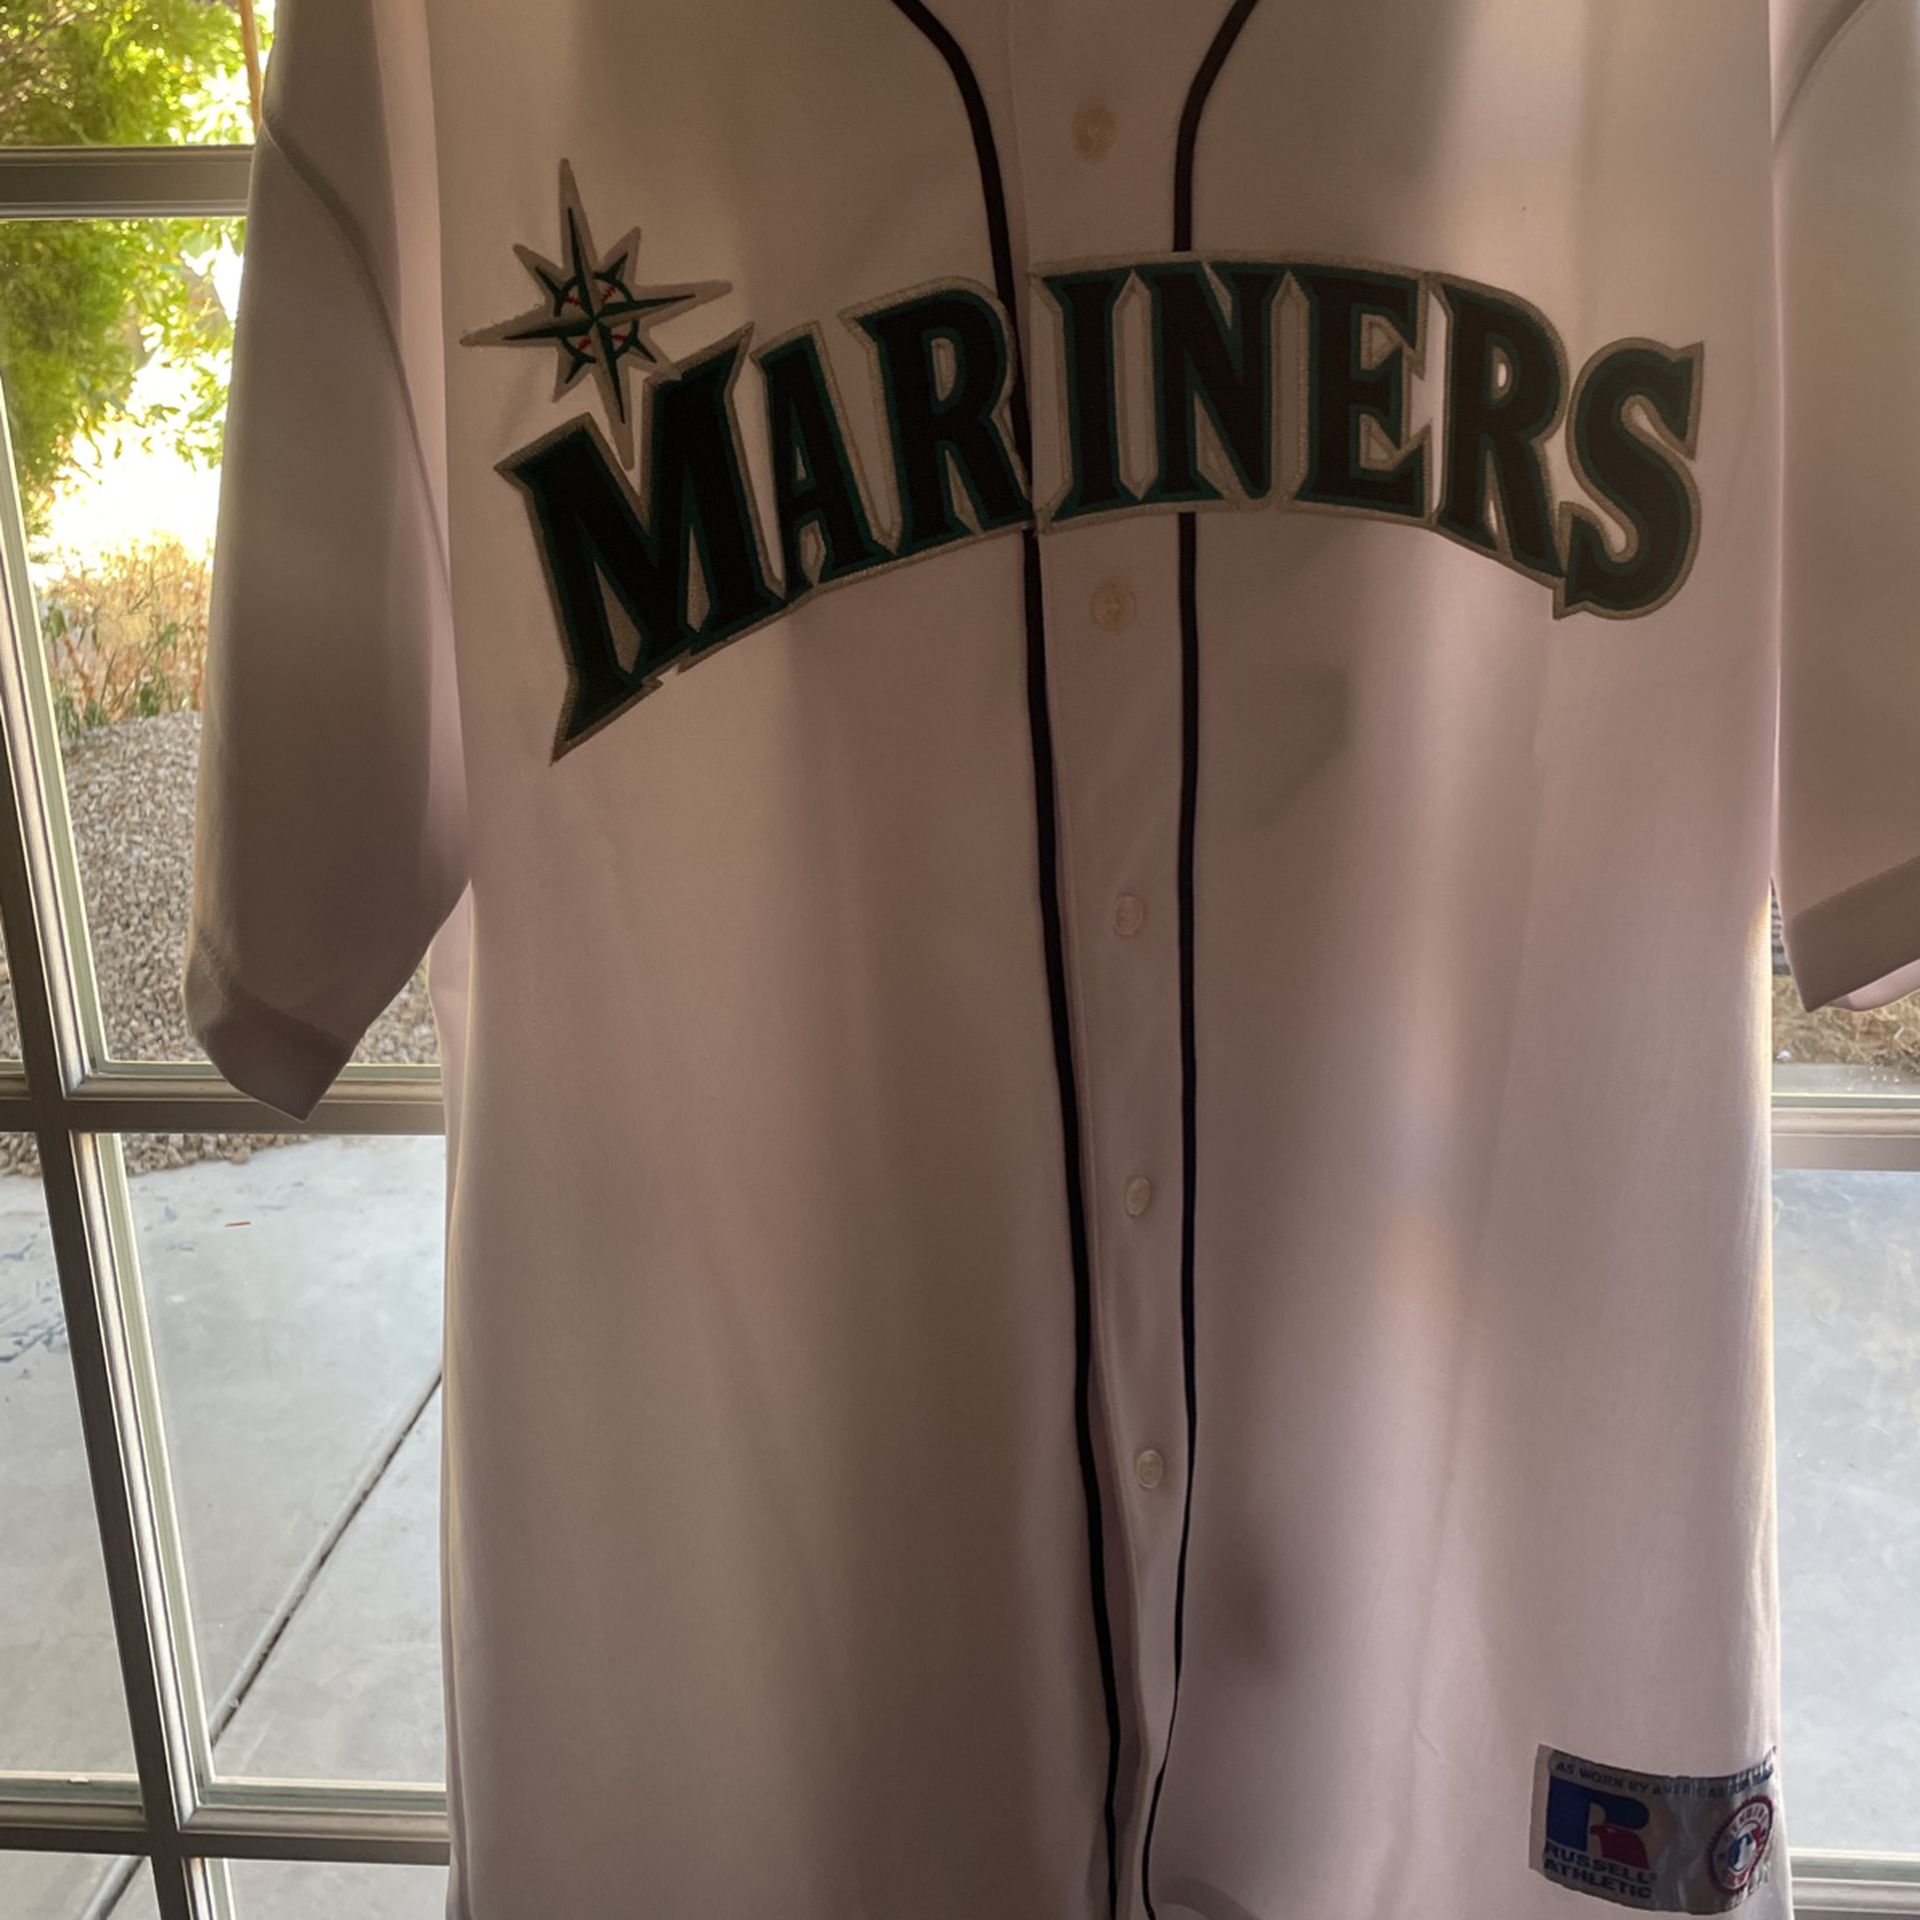 Mariners Jersey for Sale in Phoenix, AZ - OfferUp